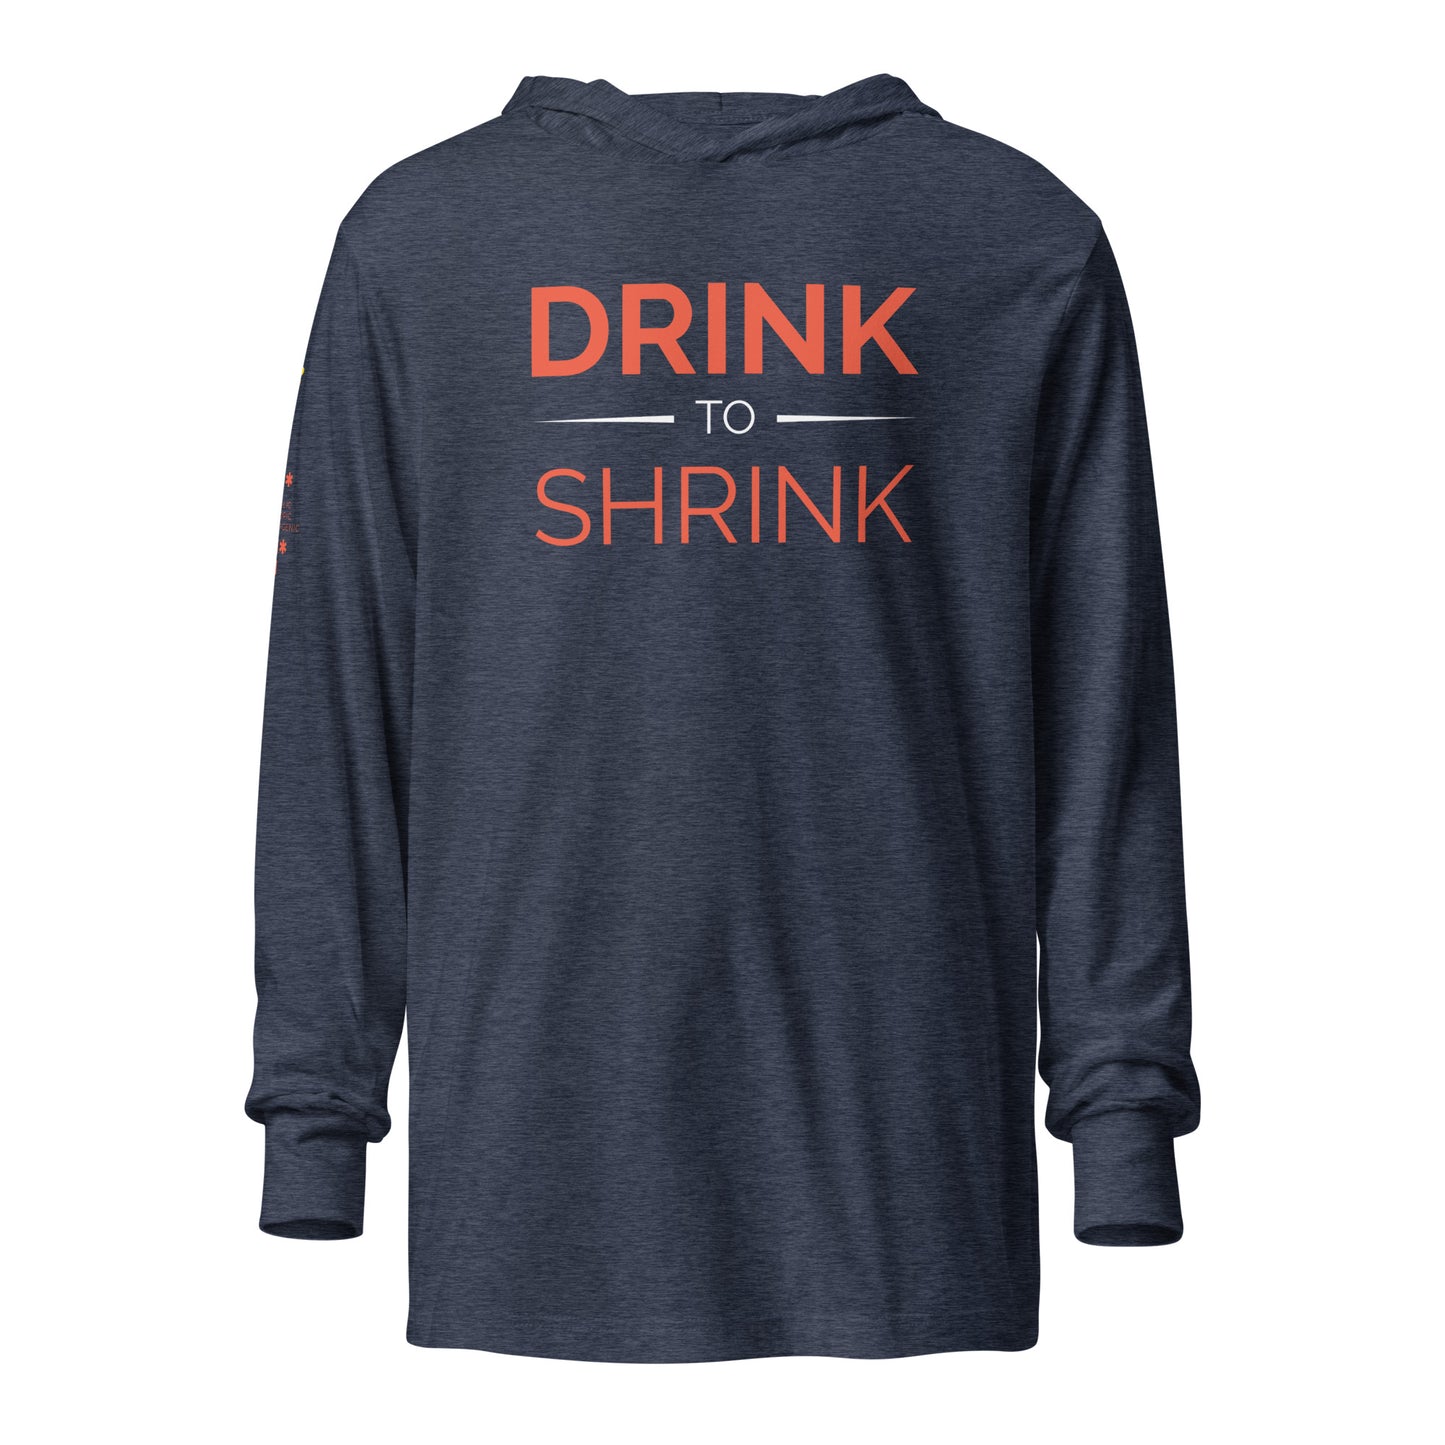 Drink to Shrink Hooded long-sleeve tee